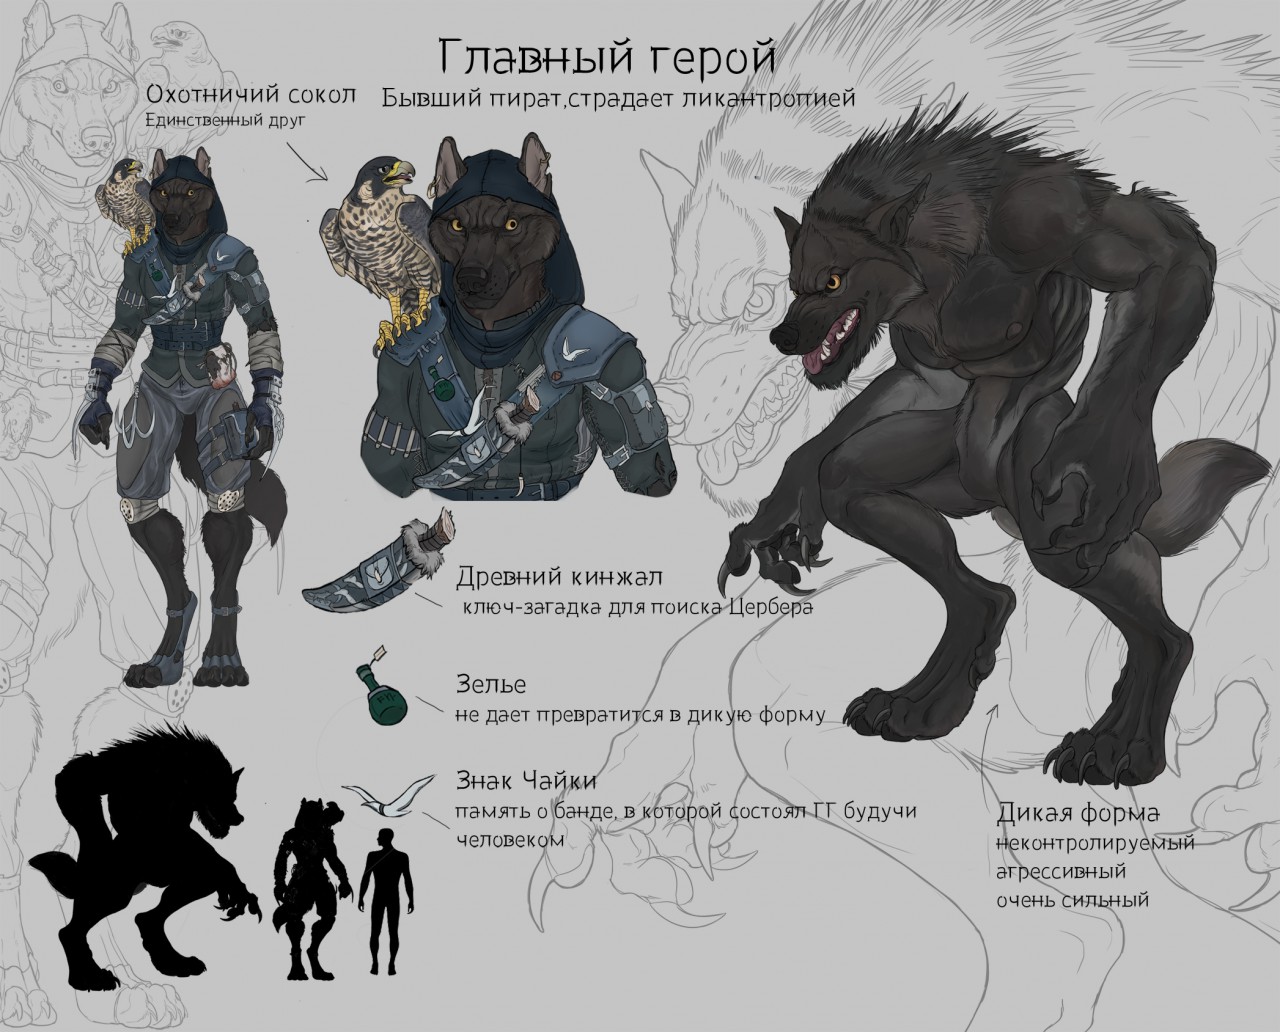 werewolf concept art